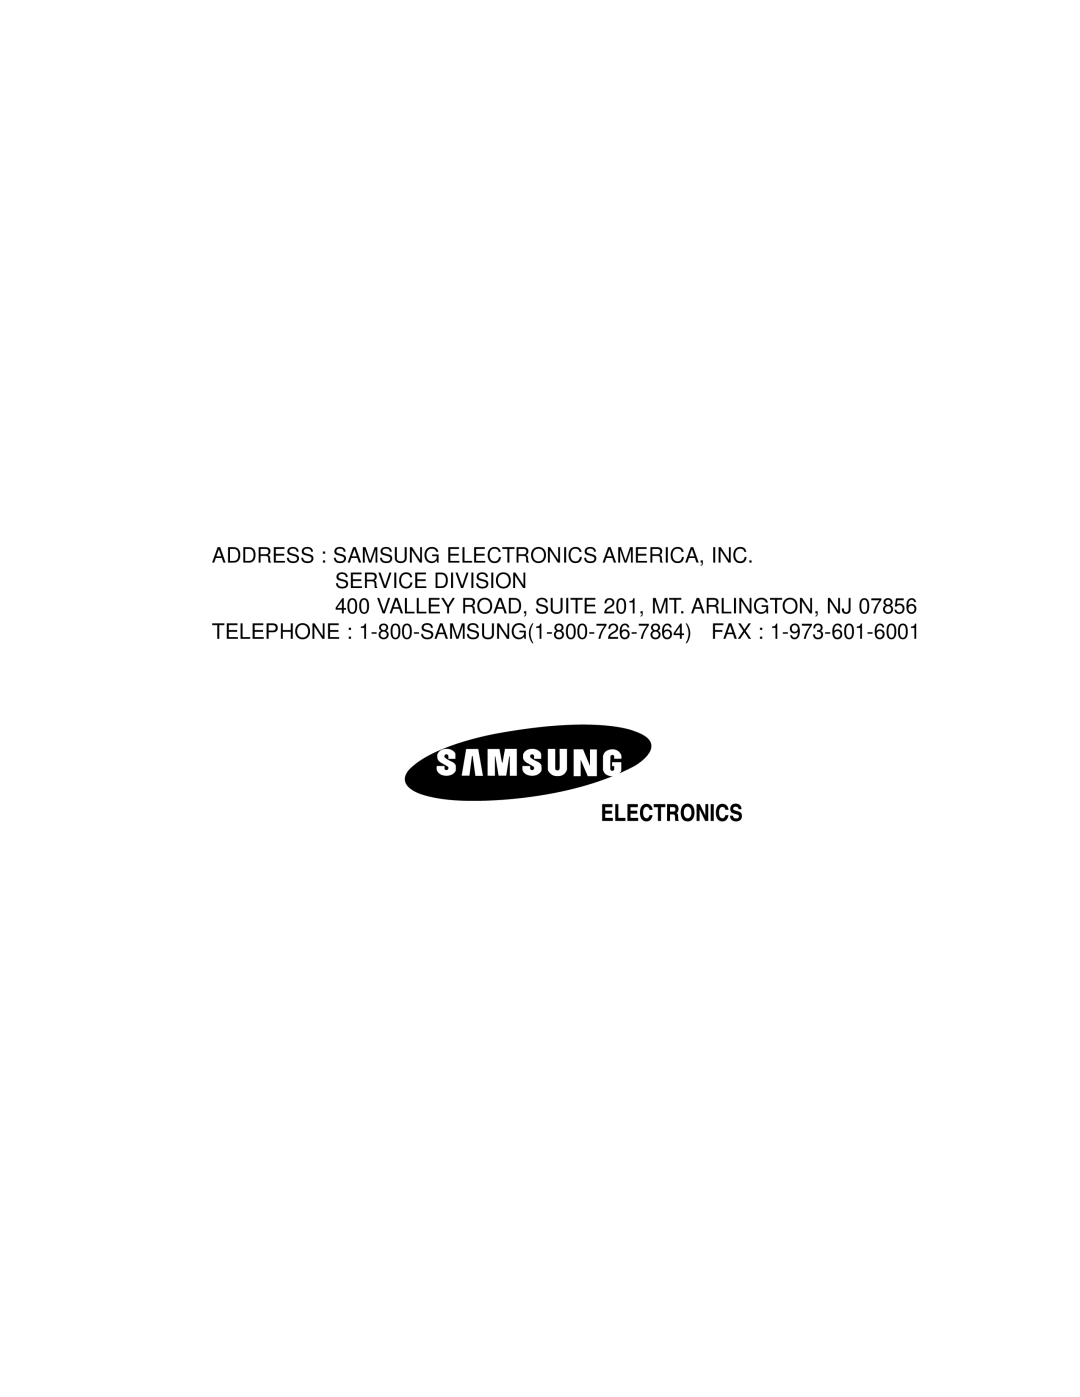 Samsung RB1944SL, RB1955SH, RB2155SW, RB2155BB, RB2155SH, RB1955VQ Address Samsung Electronics America, Inc. Service Division 